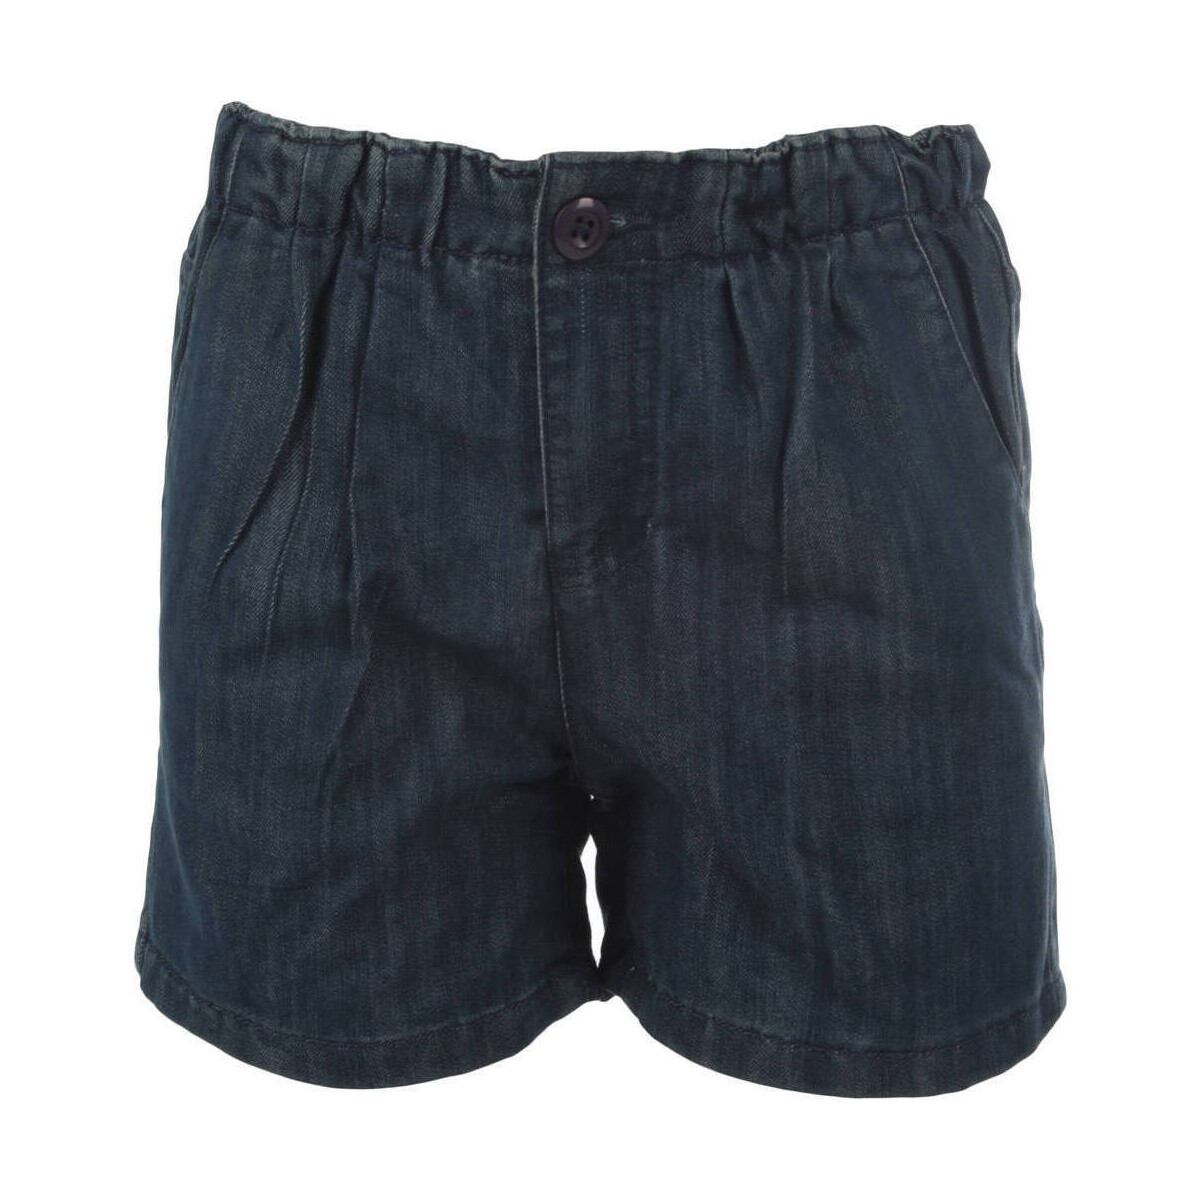 Vêtements Enfant Shorts / Bermudas Seafor PEPPA Marine